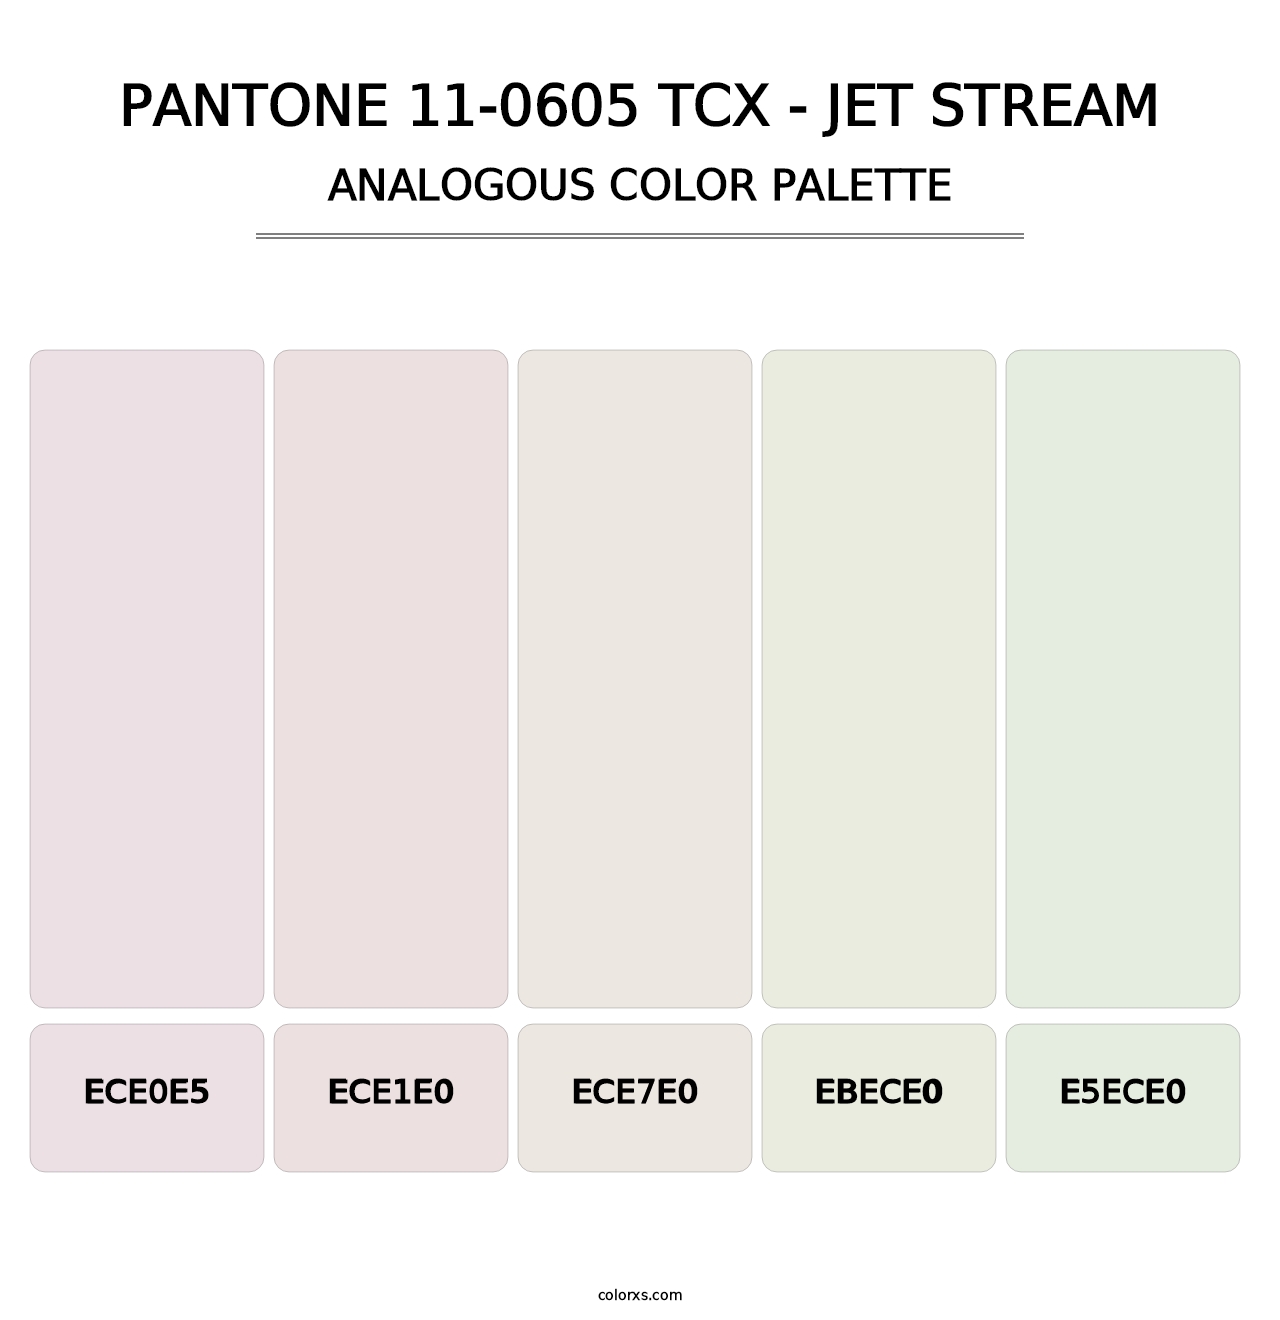 PANTONE 11-0605 TCX - Jet Stream - Analogous Color Palette